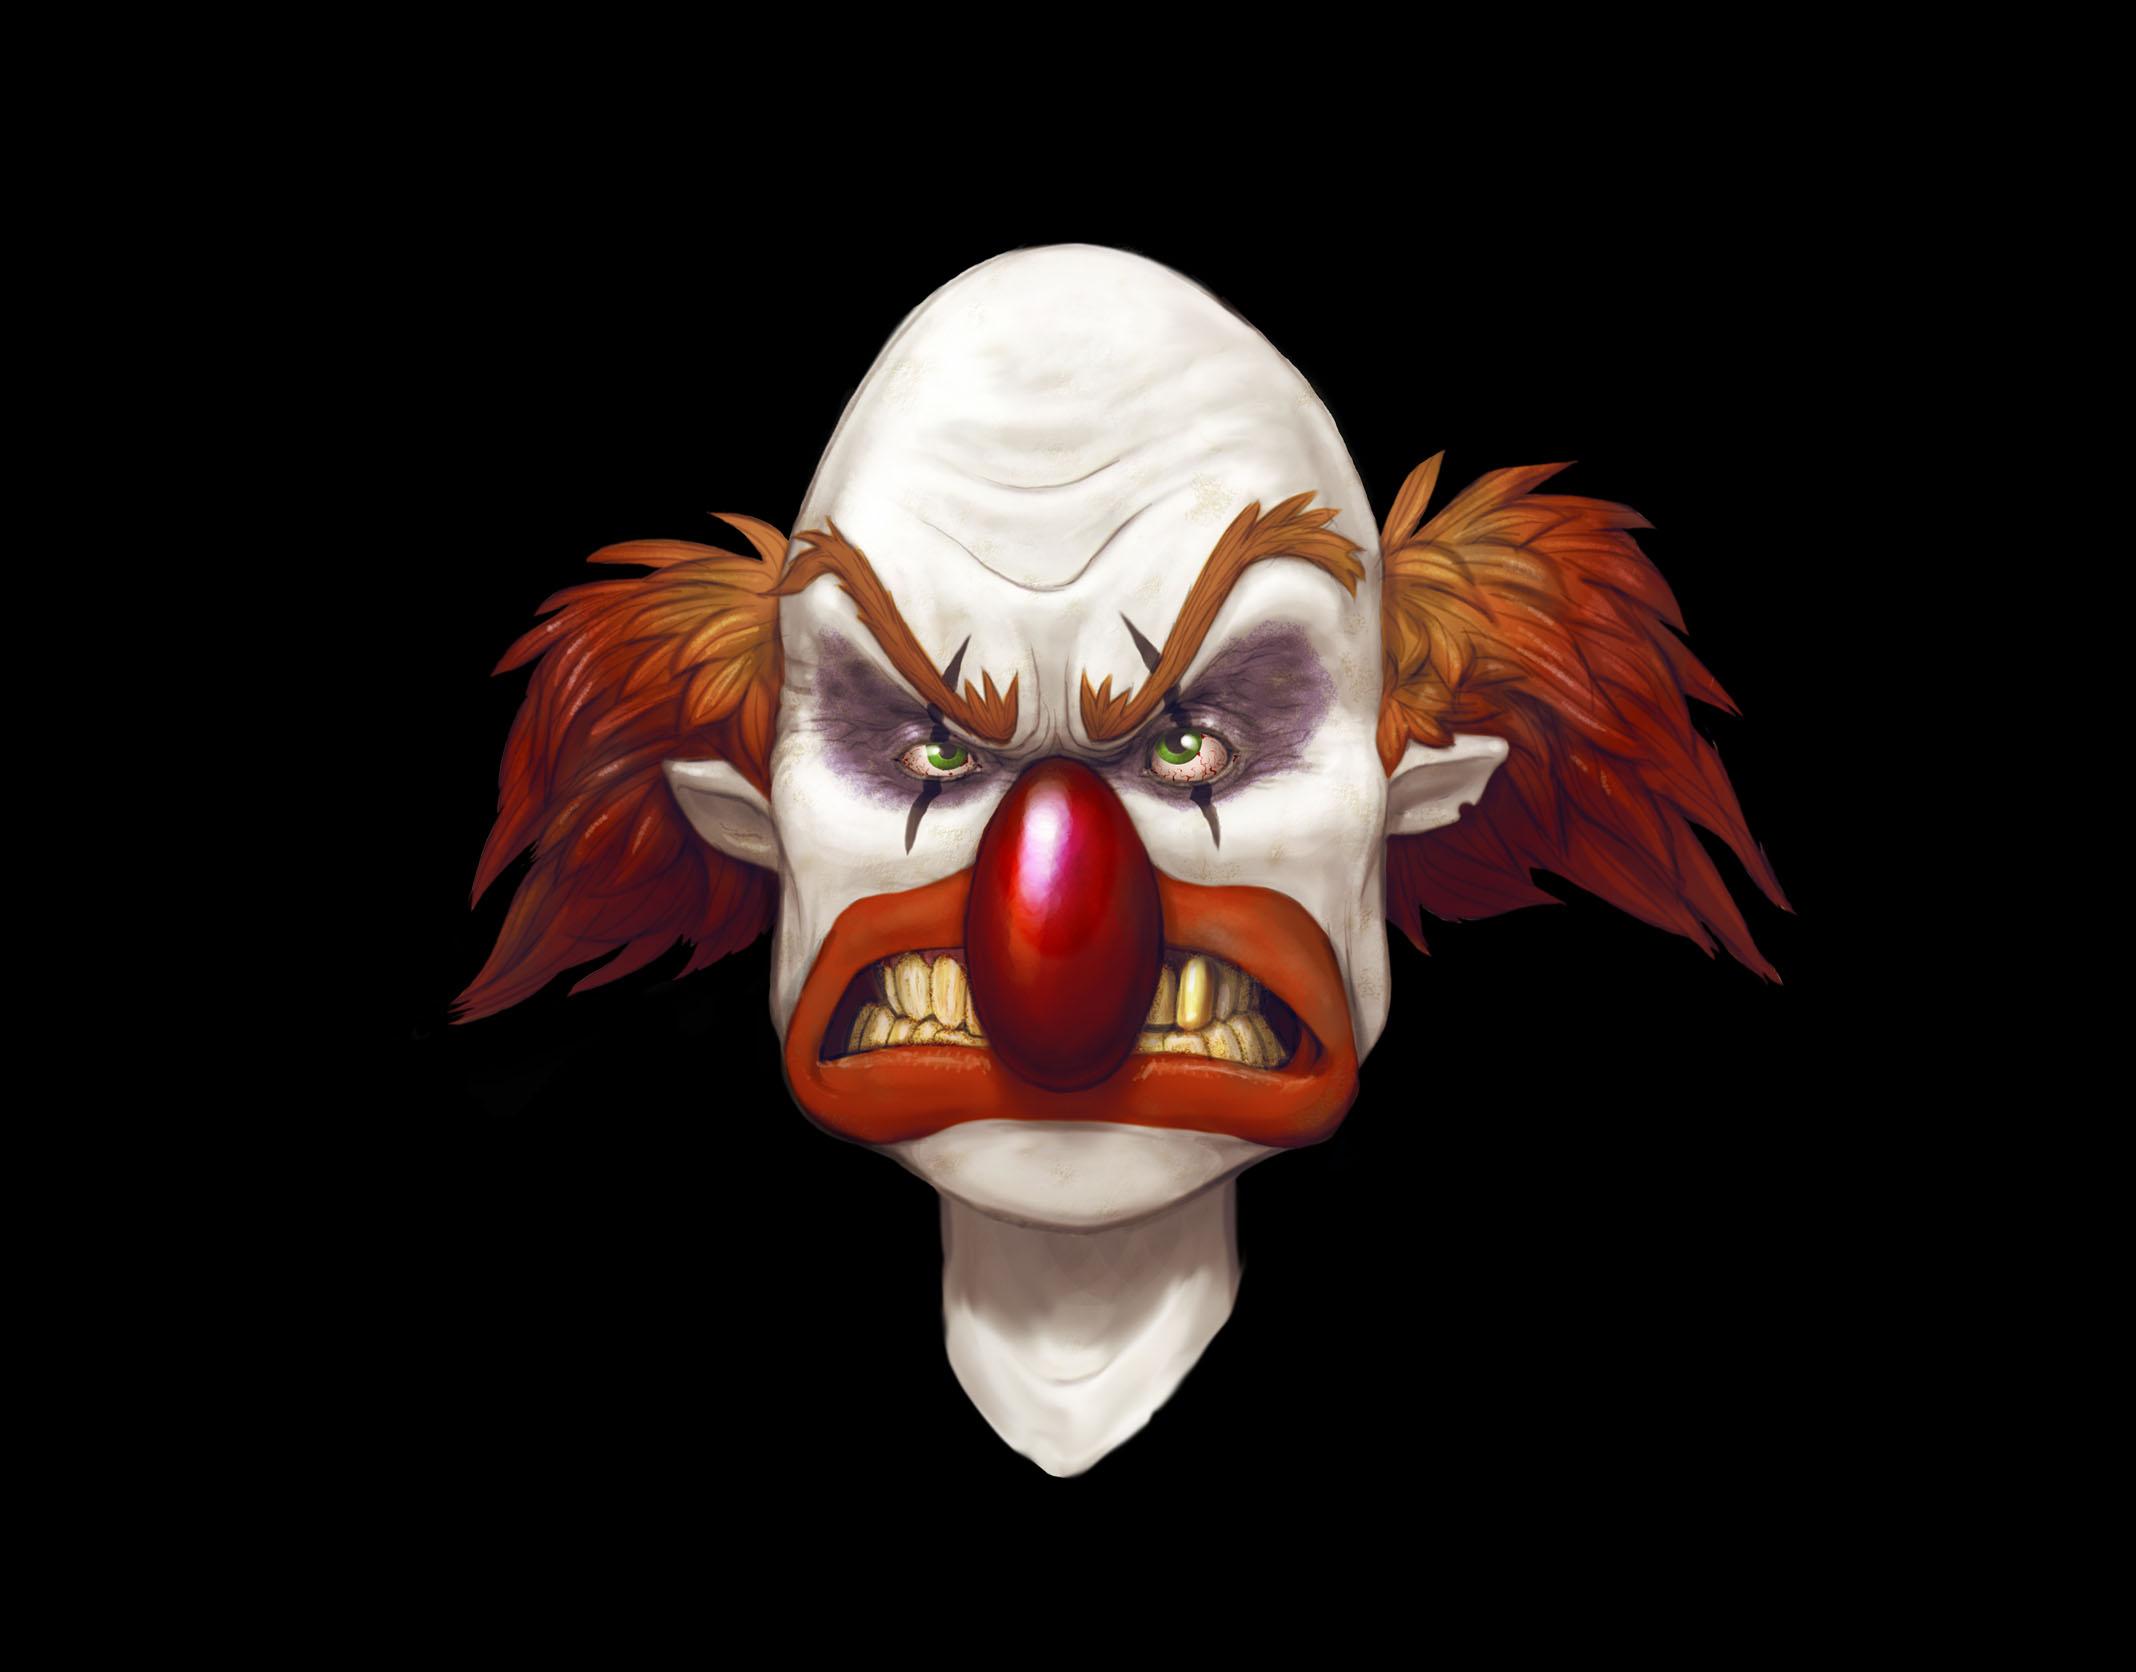 Evil Clown No 1 wallpaper from Clowns wallpaper